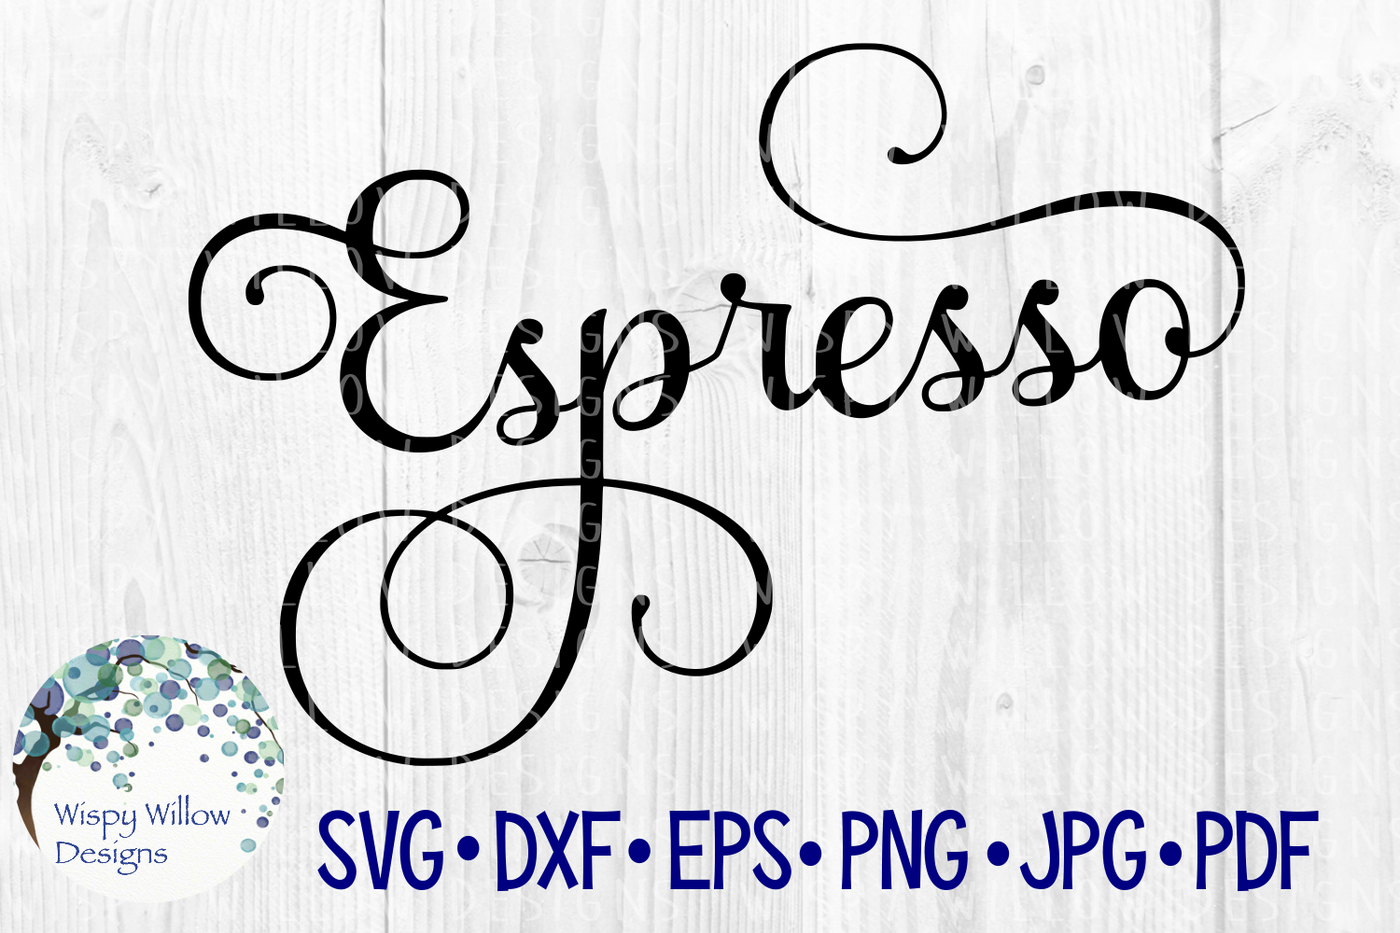 Download Espresso Coffee Label Svg Dxf Eps Png Jpg Pdf By Wispy Willow Designs Thehungryjpeg Com